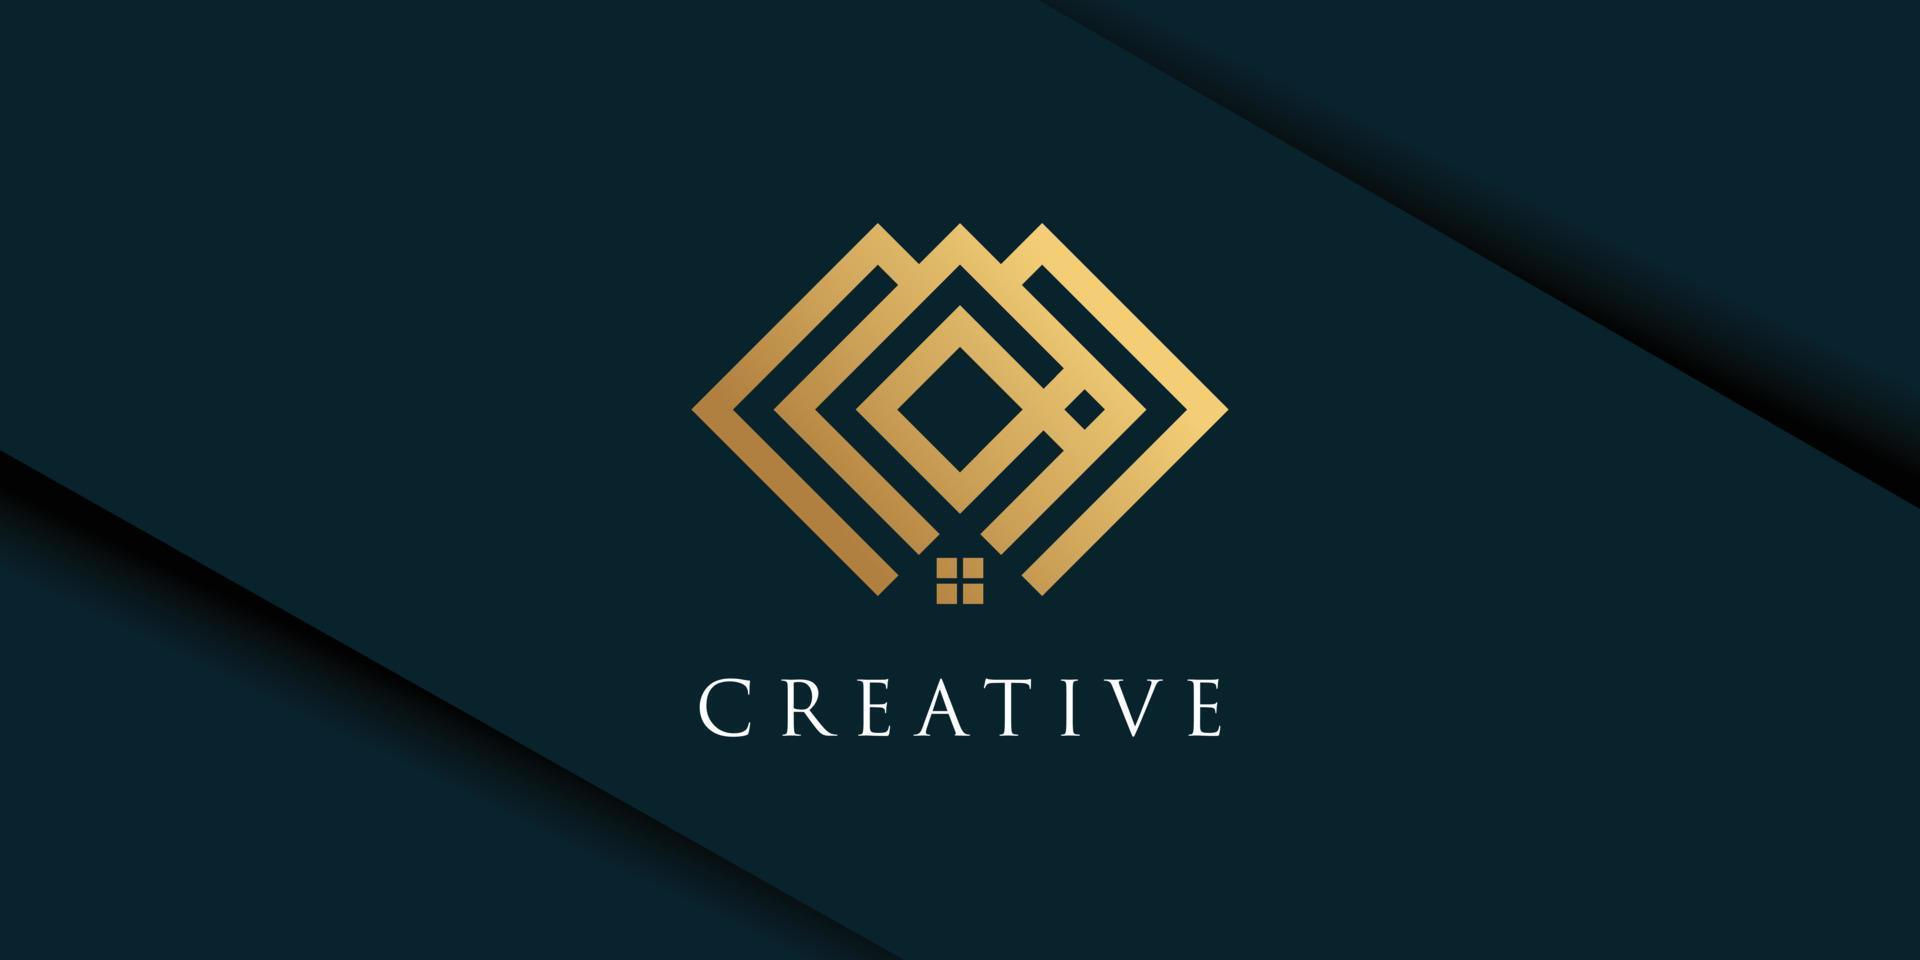 Mansion house logo with gold gradient creative design premium vector